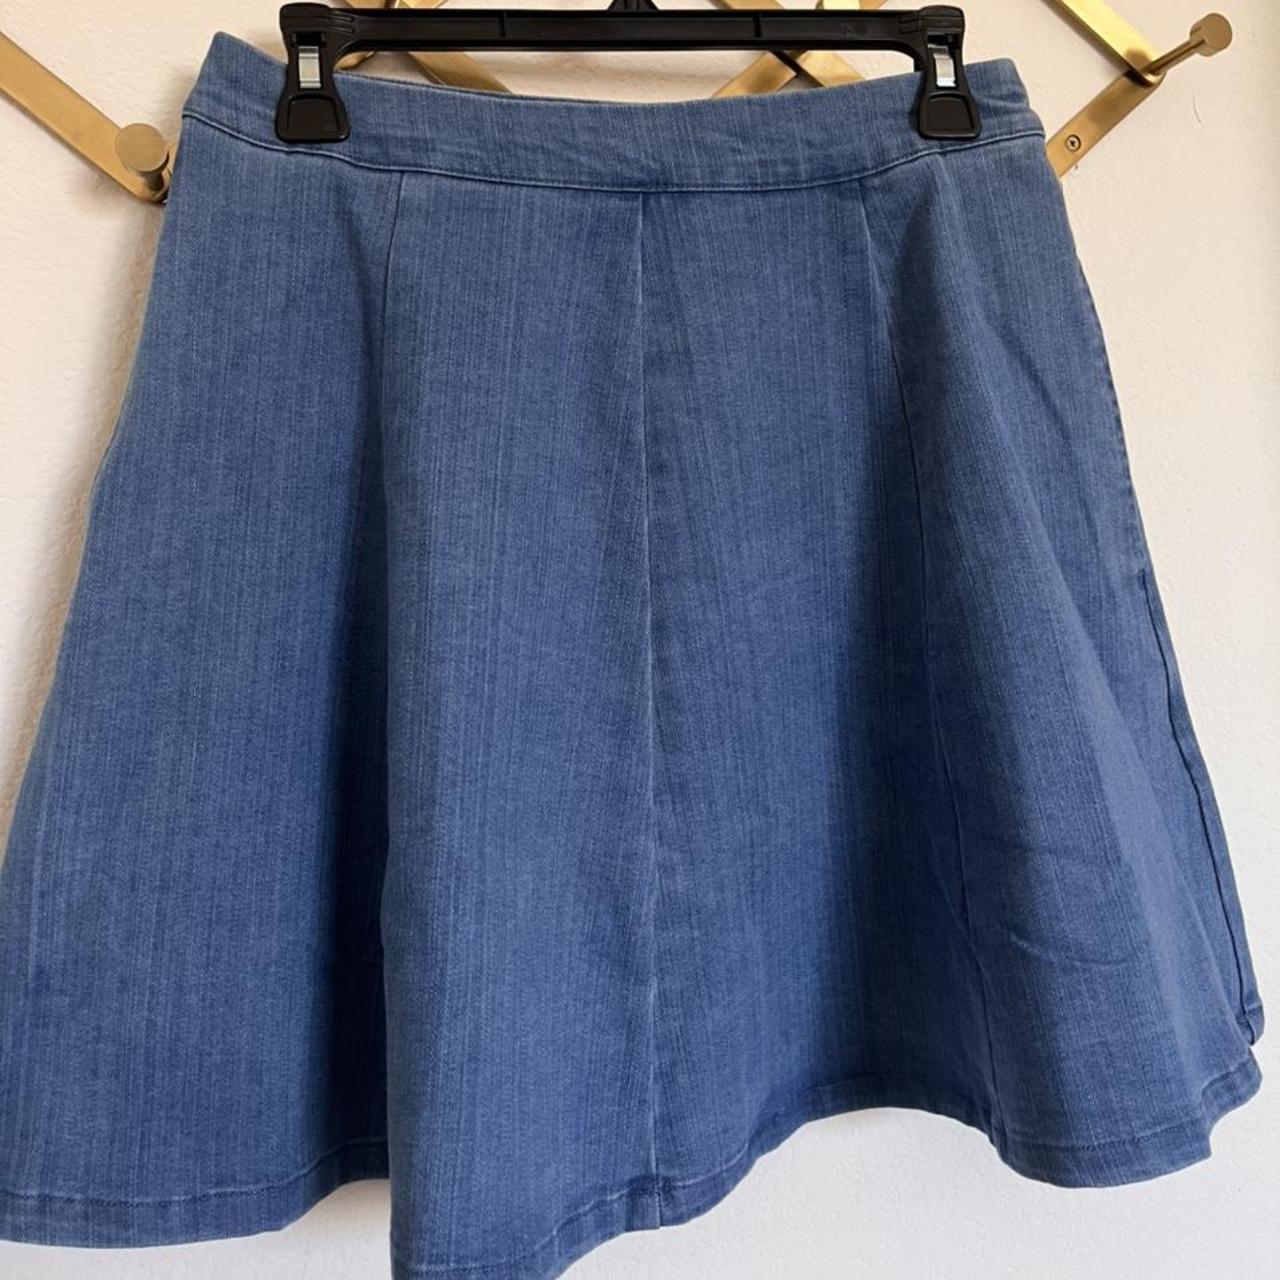 Product Image 2 - Denim Skater
medium denim skirt with